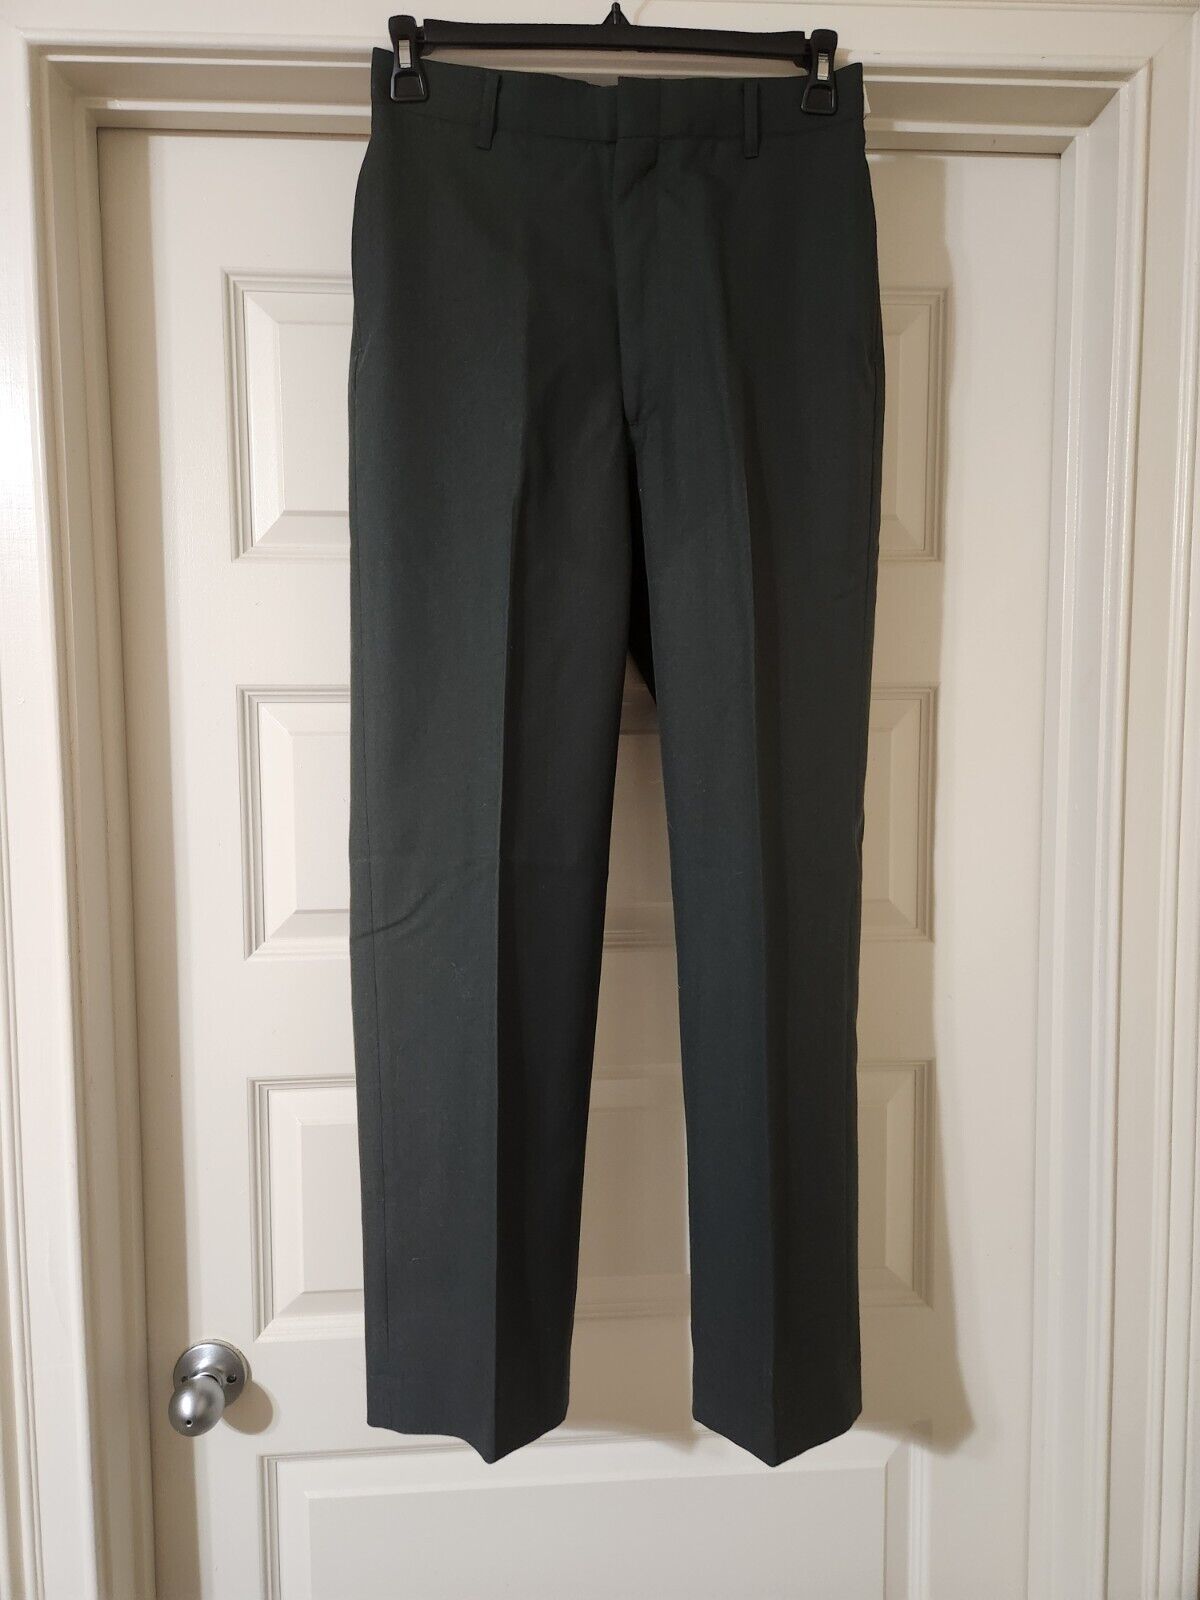 Men's military Uniform Wool/Poly Dress Trousers pants 31R Serge Green  nwt